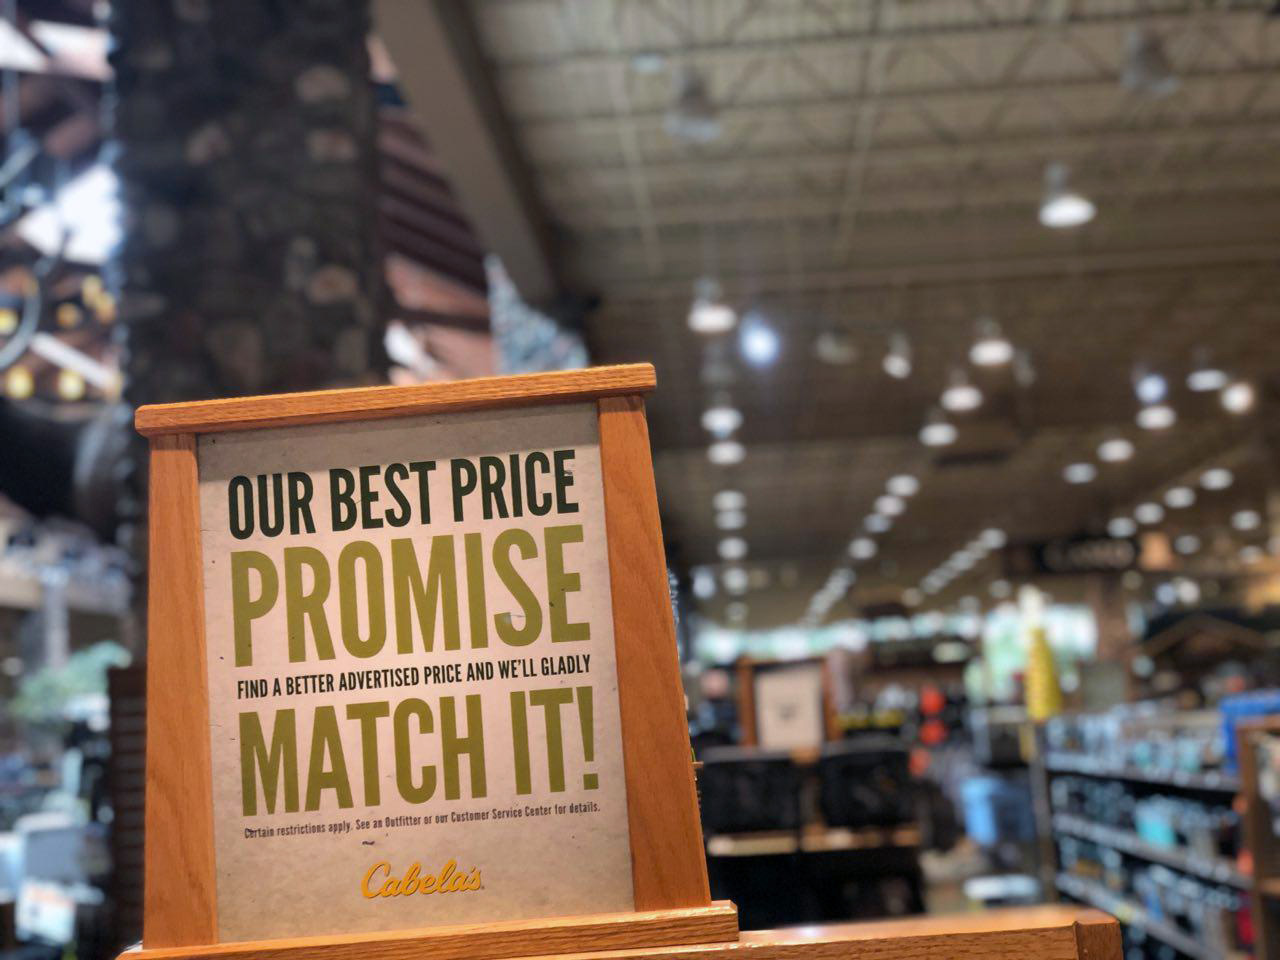 Cabela's Best Price Promoce Match